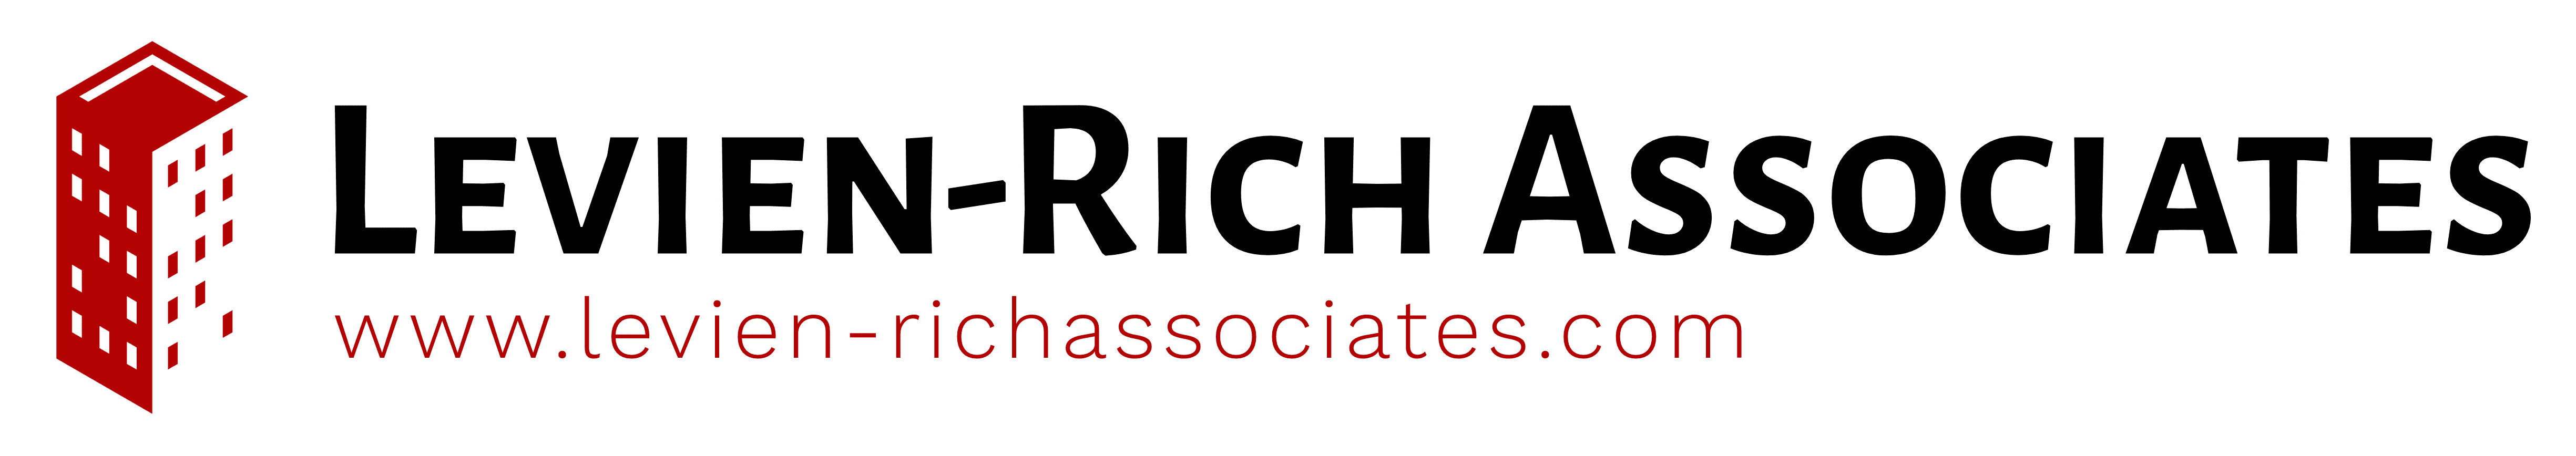 Levien-Rich Associates